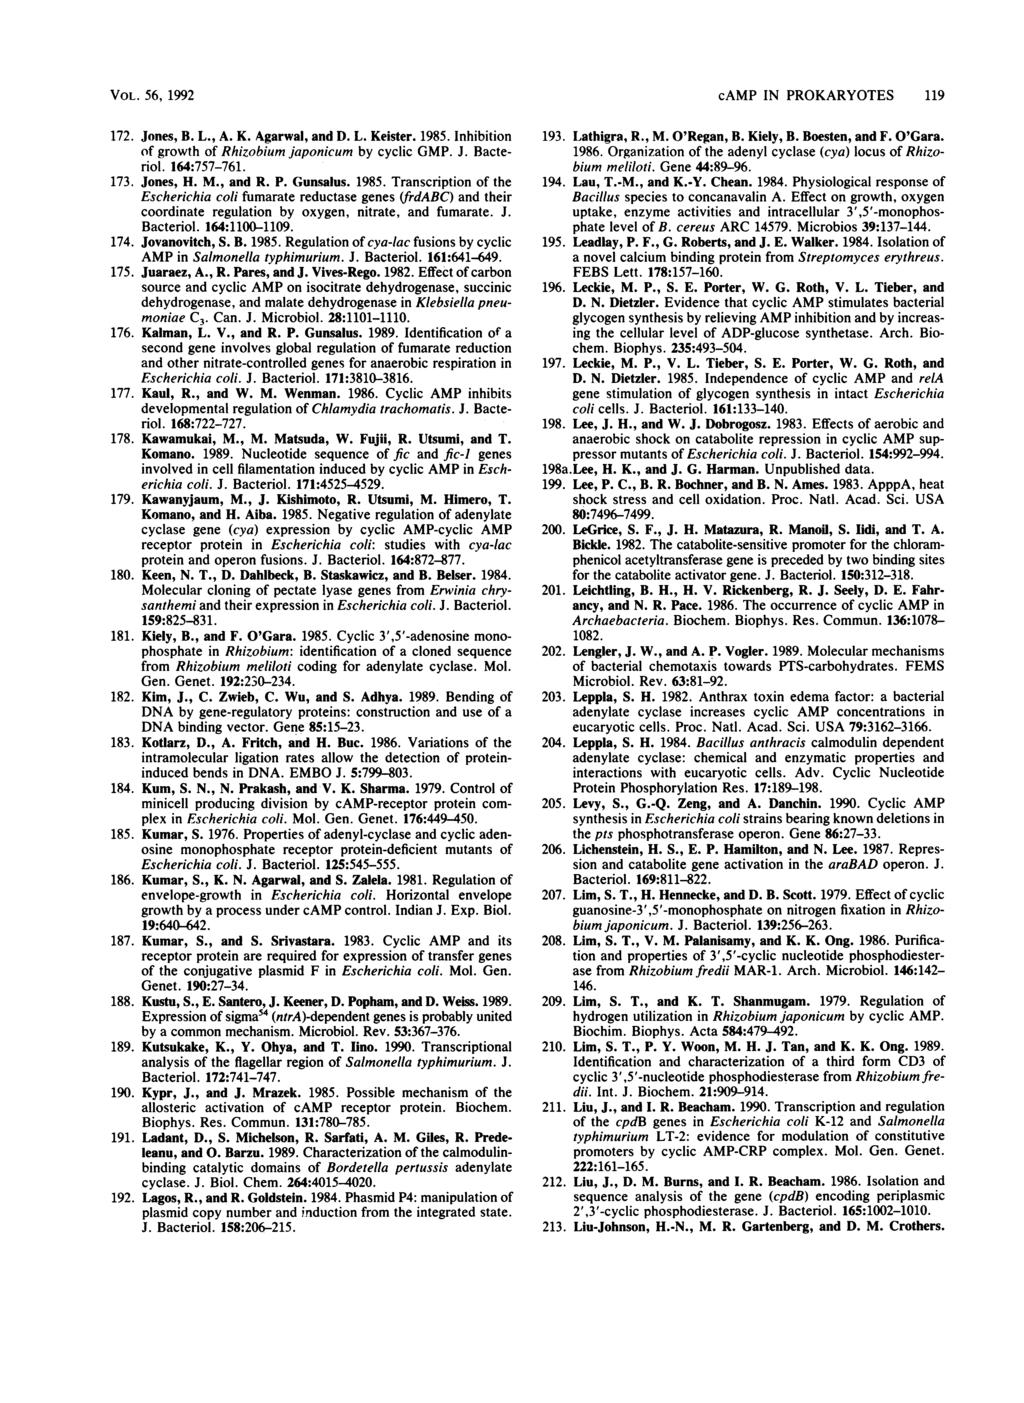 VOL. 56, 1992 172. Jones, B. L., A. K. Agarwal, and. L. Keister. 1985. Inhibition of growth of Rhizobium japonicum by cyclic GMP. J. Bacteriol. 164:757-761. 173. Jones, H. M., and R. P. Gunsalus.